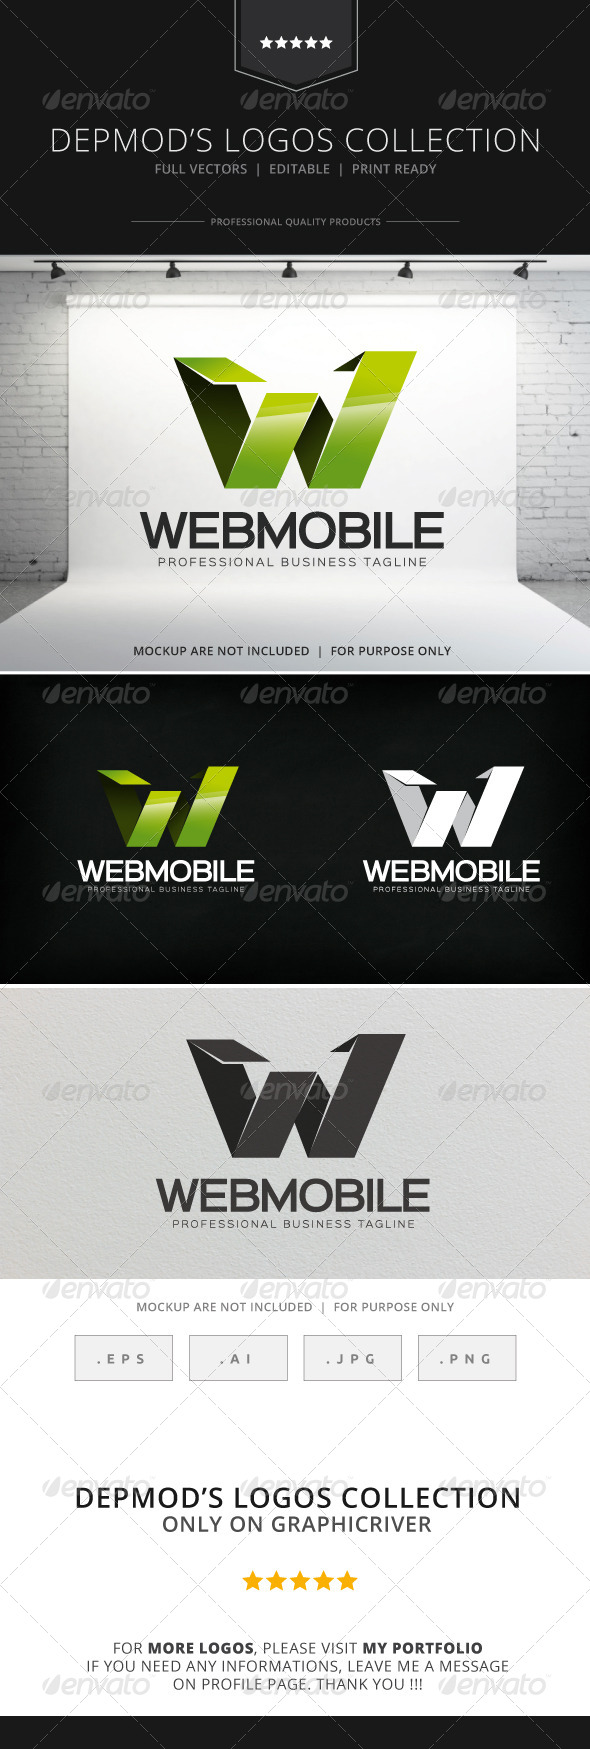 Web Mobile Logo